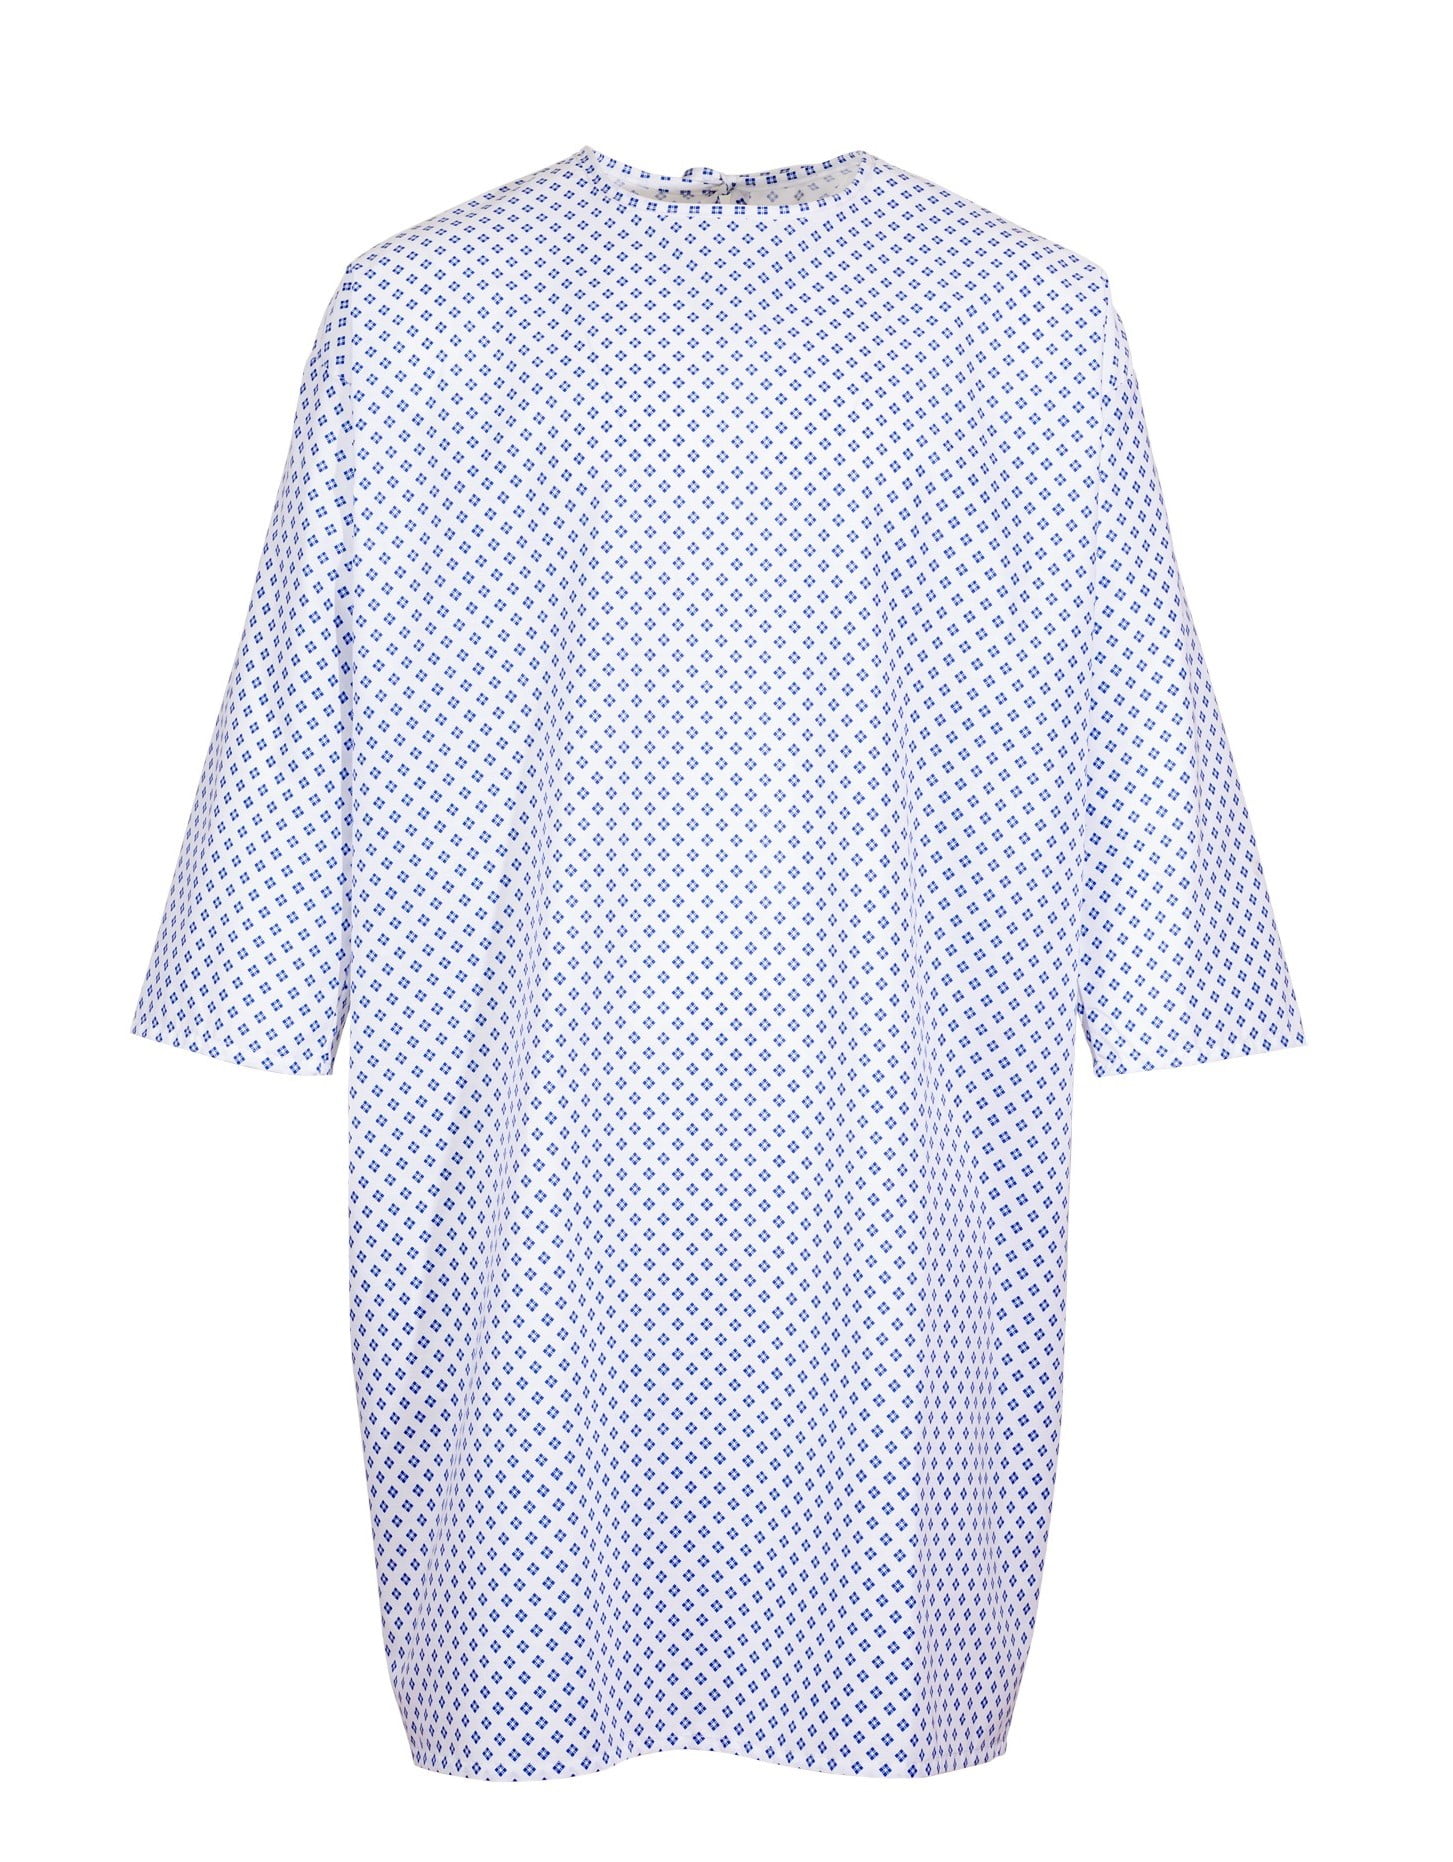 Simplicity Sewing Pattern S9262 Misses' V-neckline Shift Dresses 9262 -  Patterns and Plains